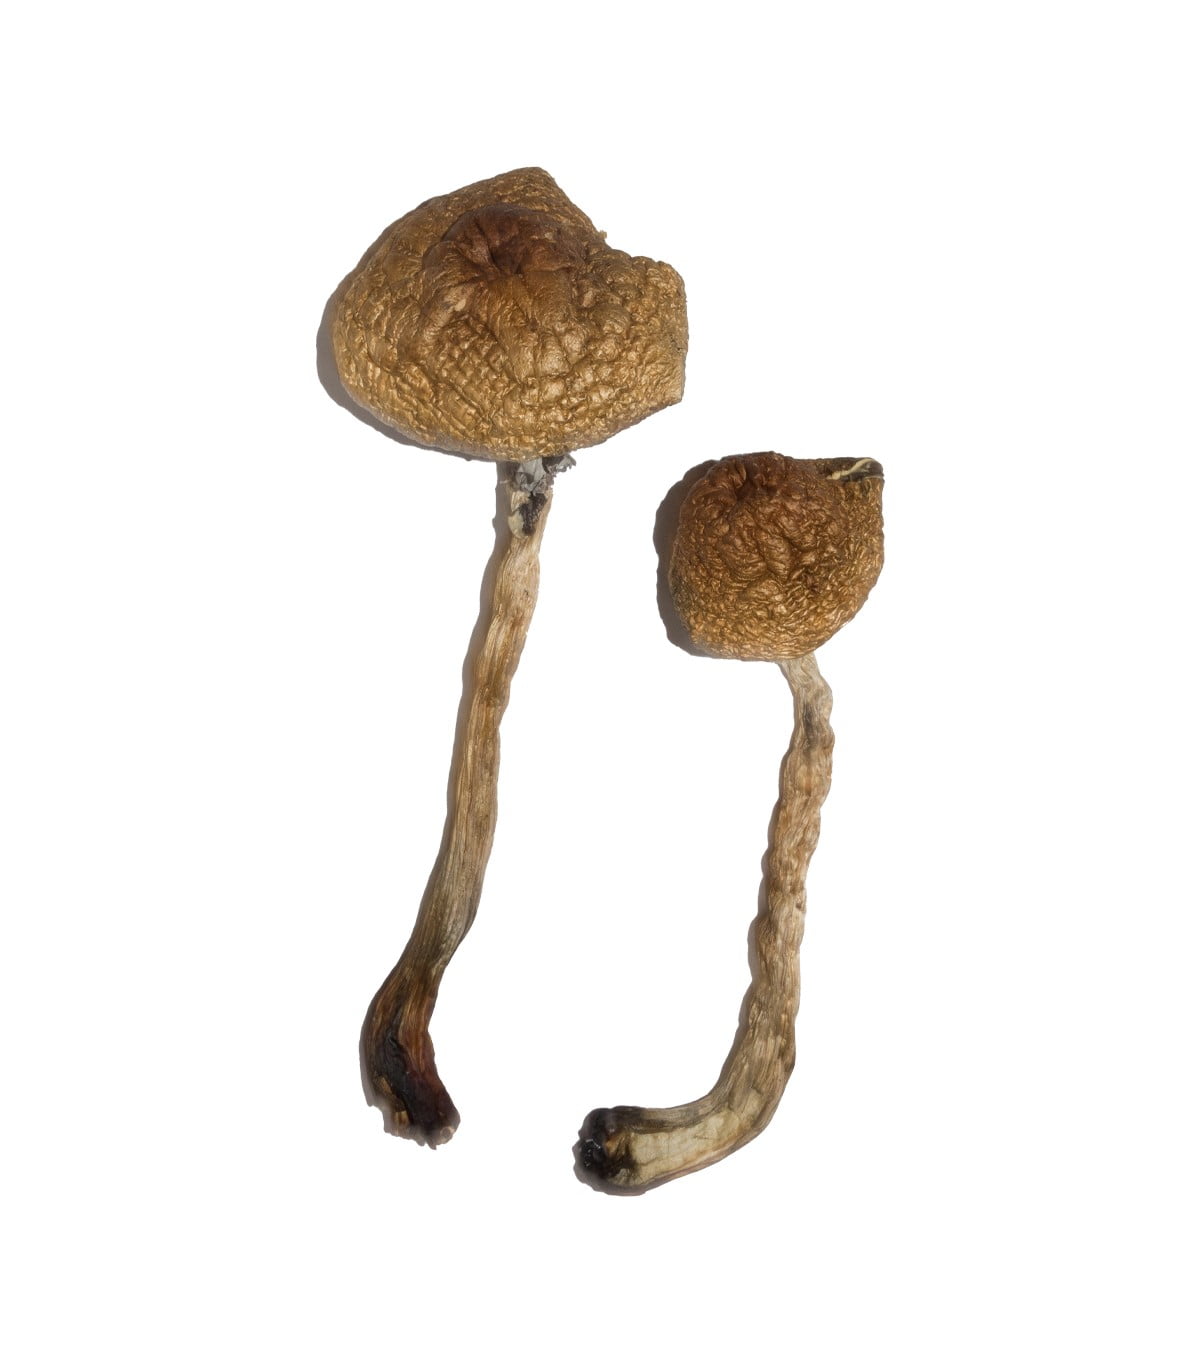 Buy Malabar Magic Mushrooms online In Canada